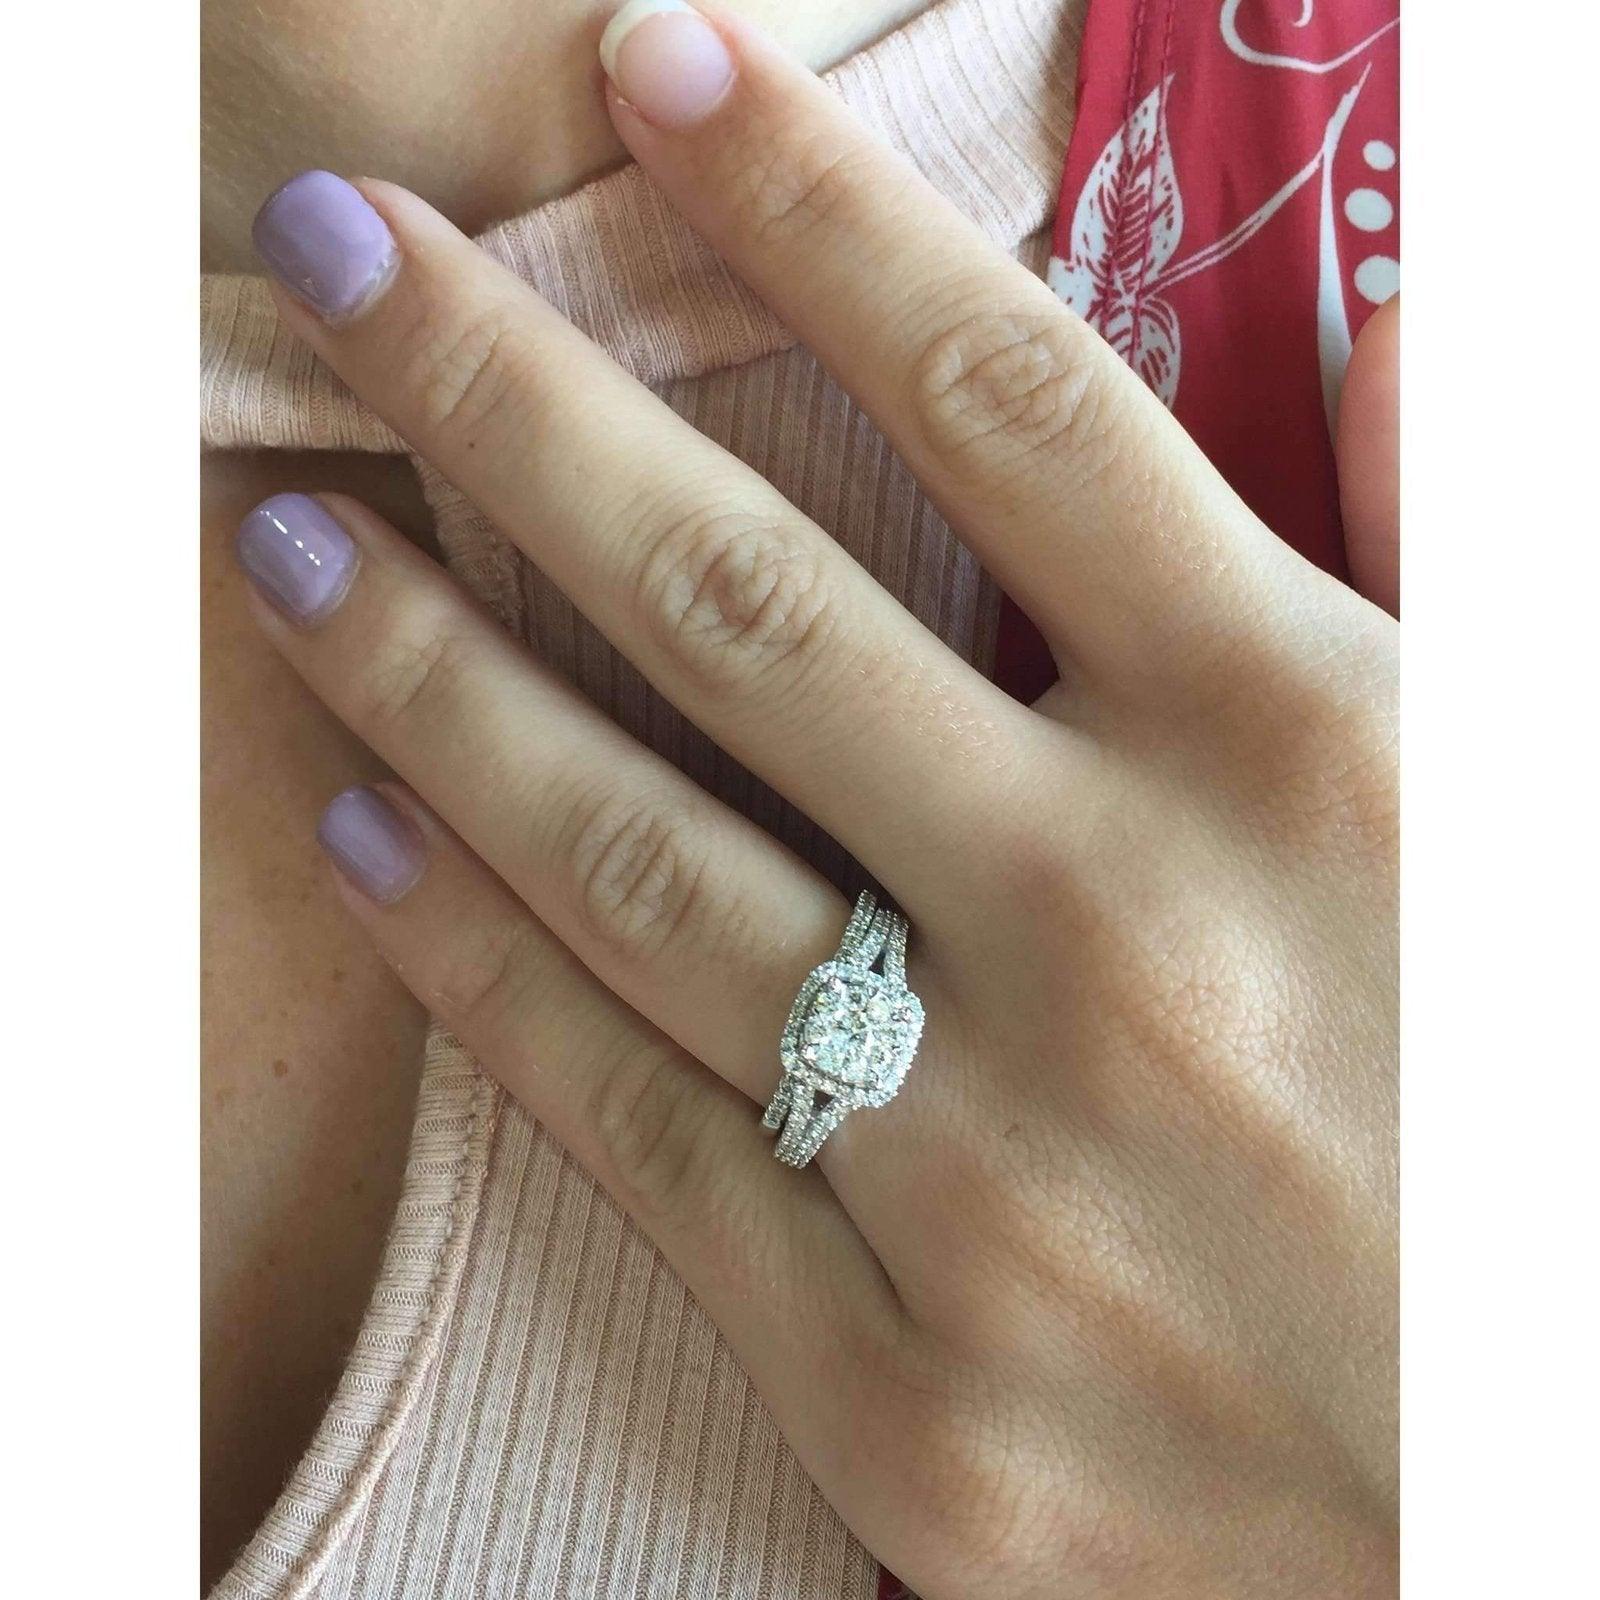 Beautiful Bride Engagement Ring Beautiful Bride Collection Halo Diamond Ring Set 1ctw